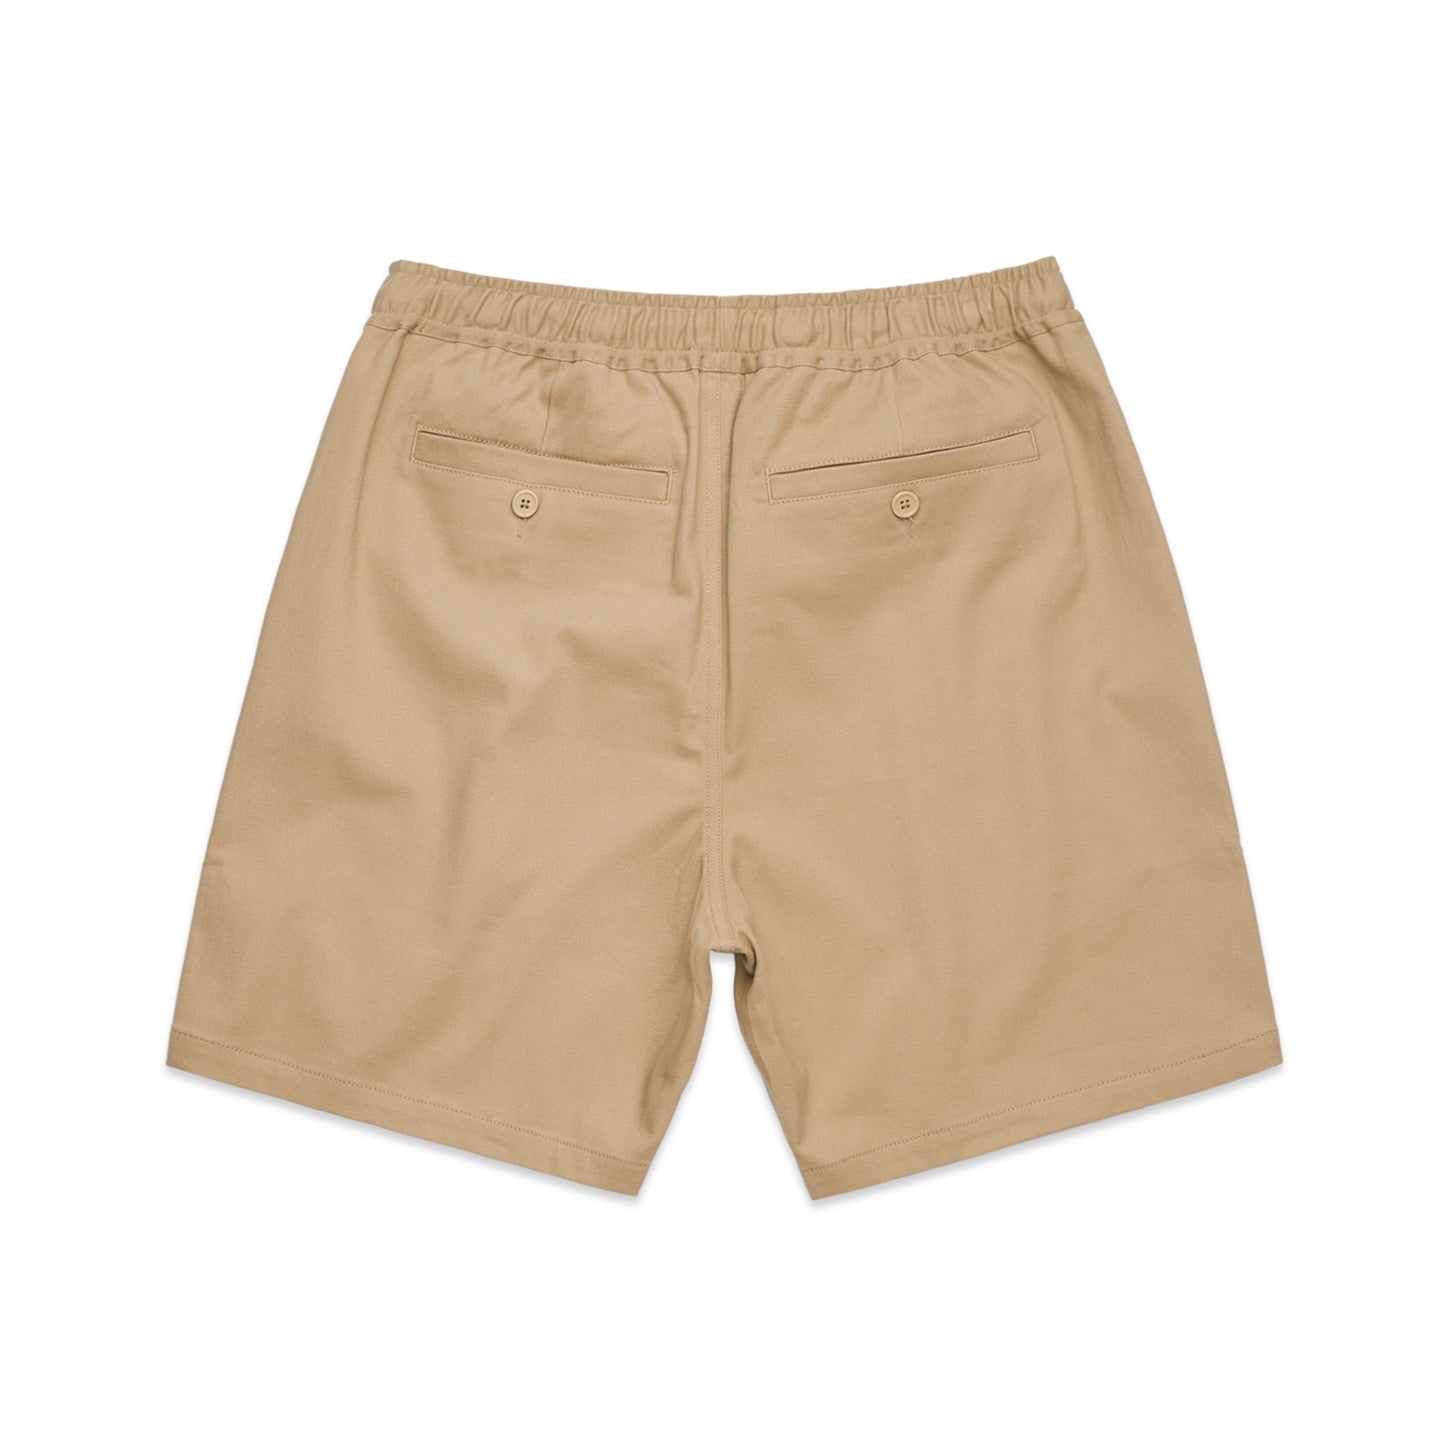 SOULSKY Men's Casual Shorts (Khaki)